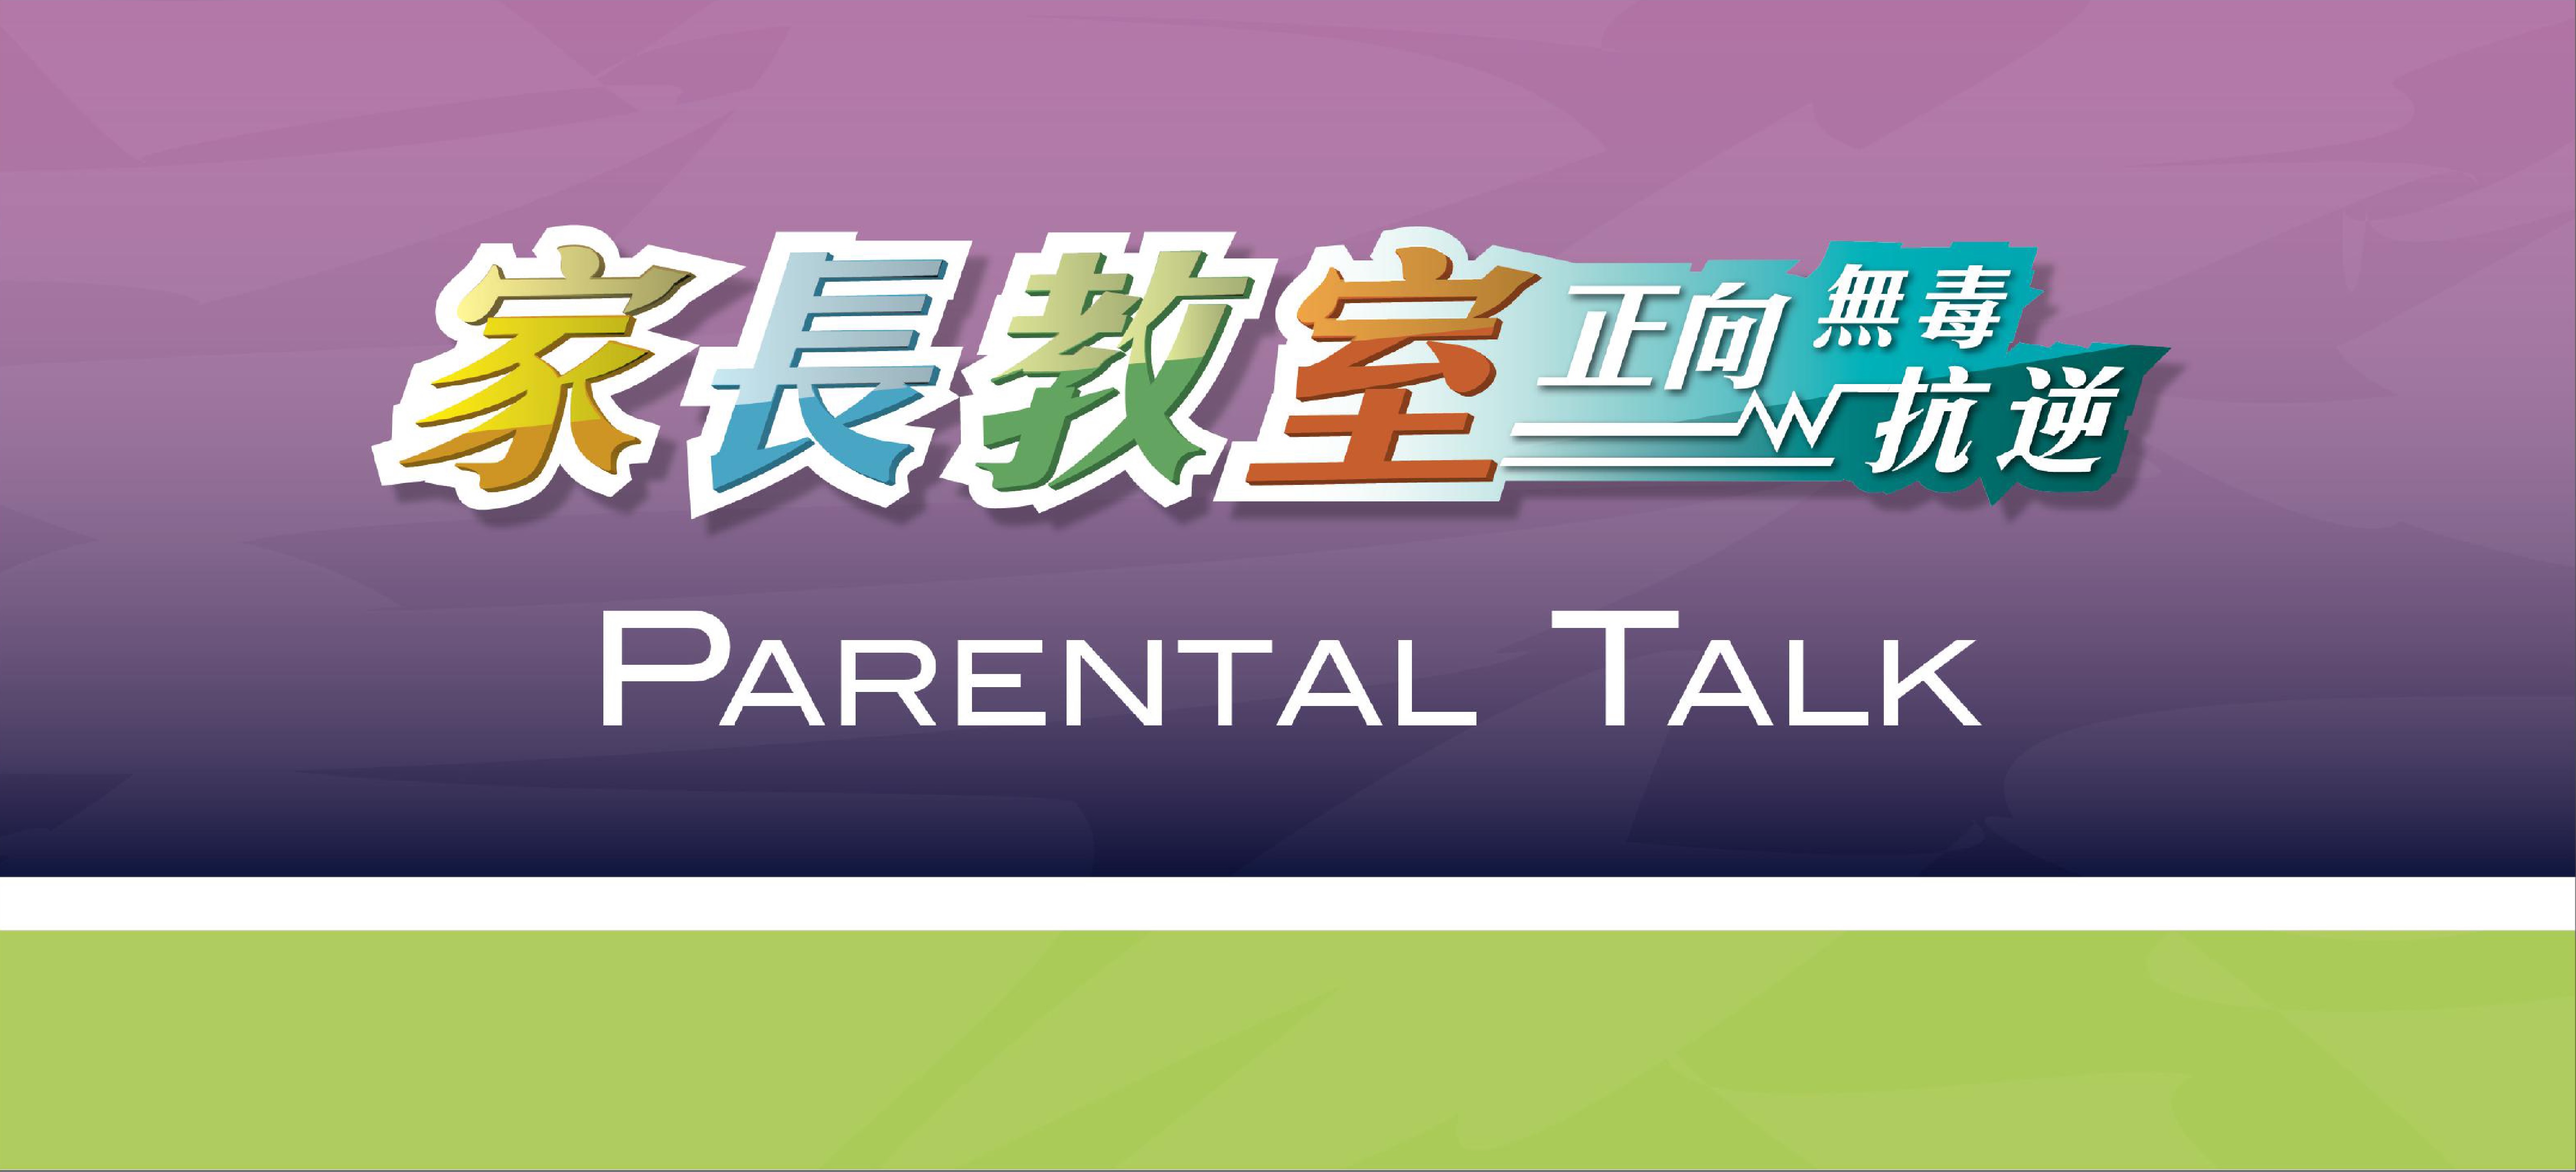 dic parental talk large banner